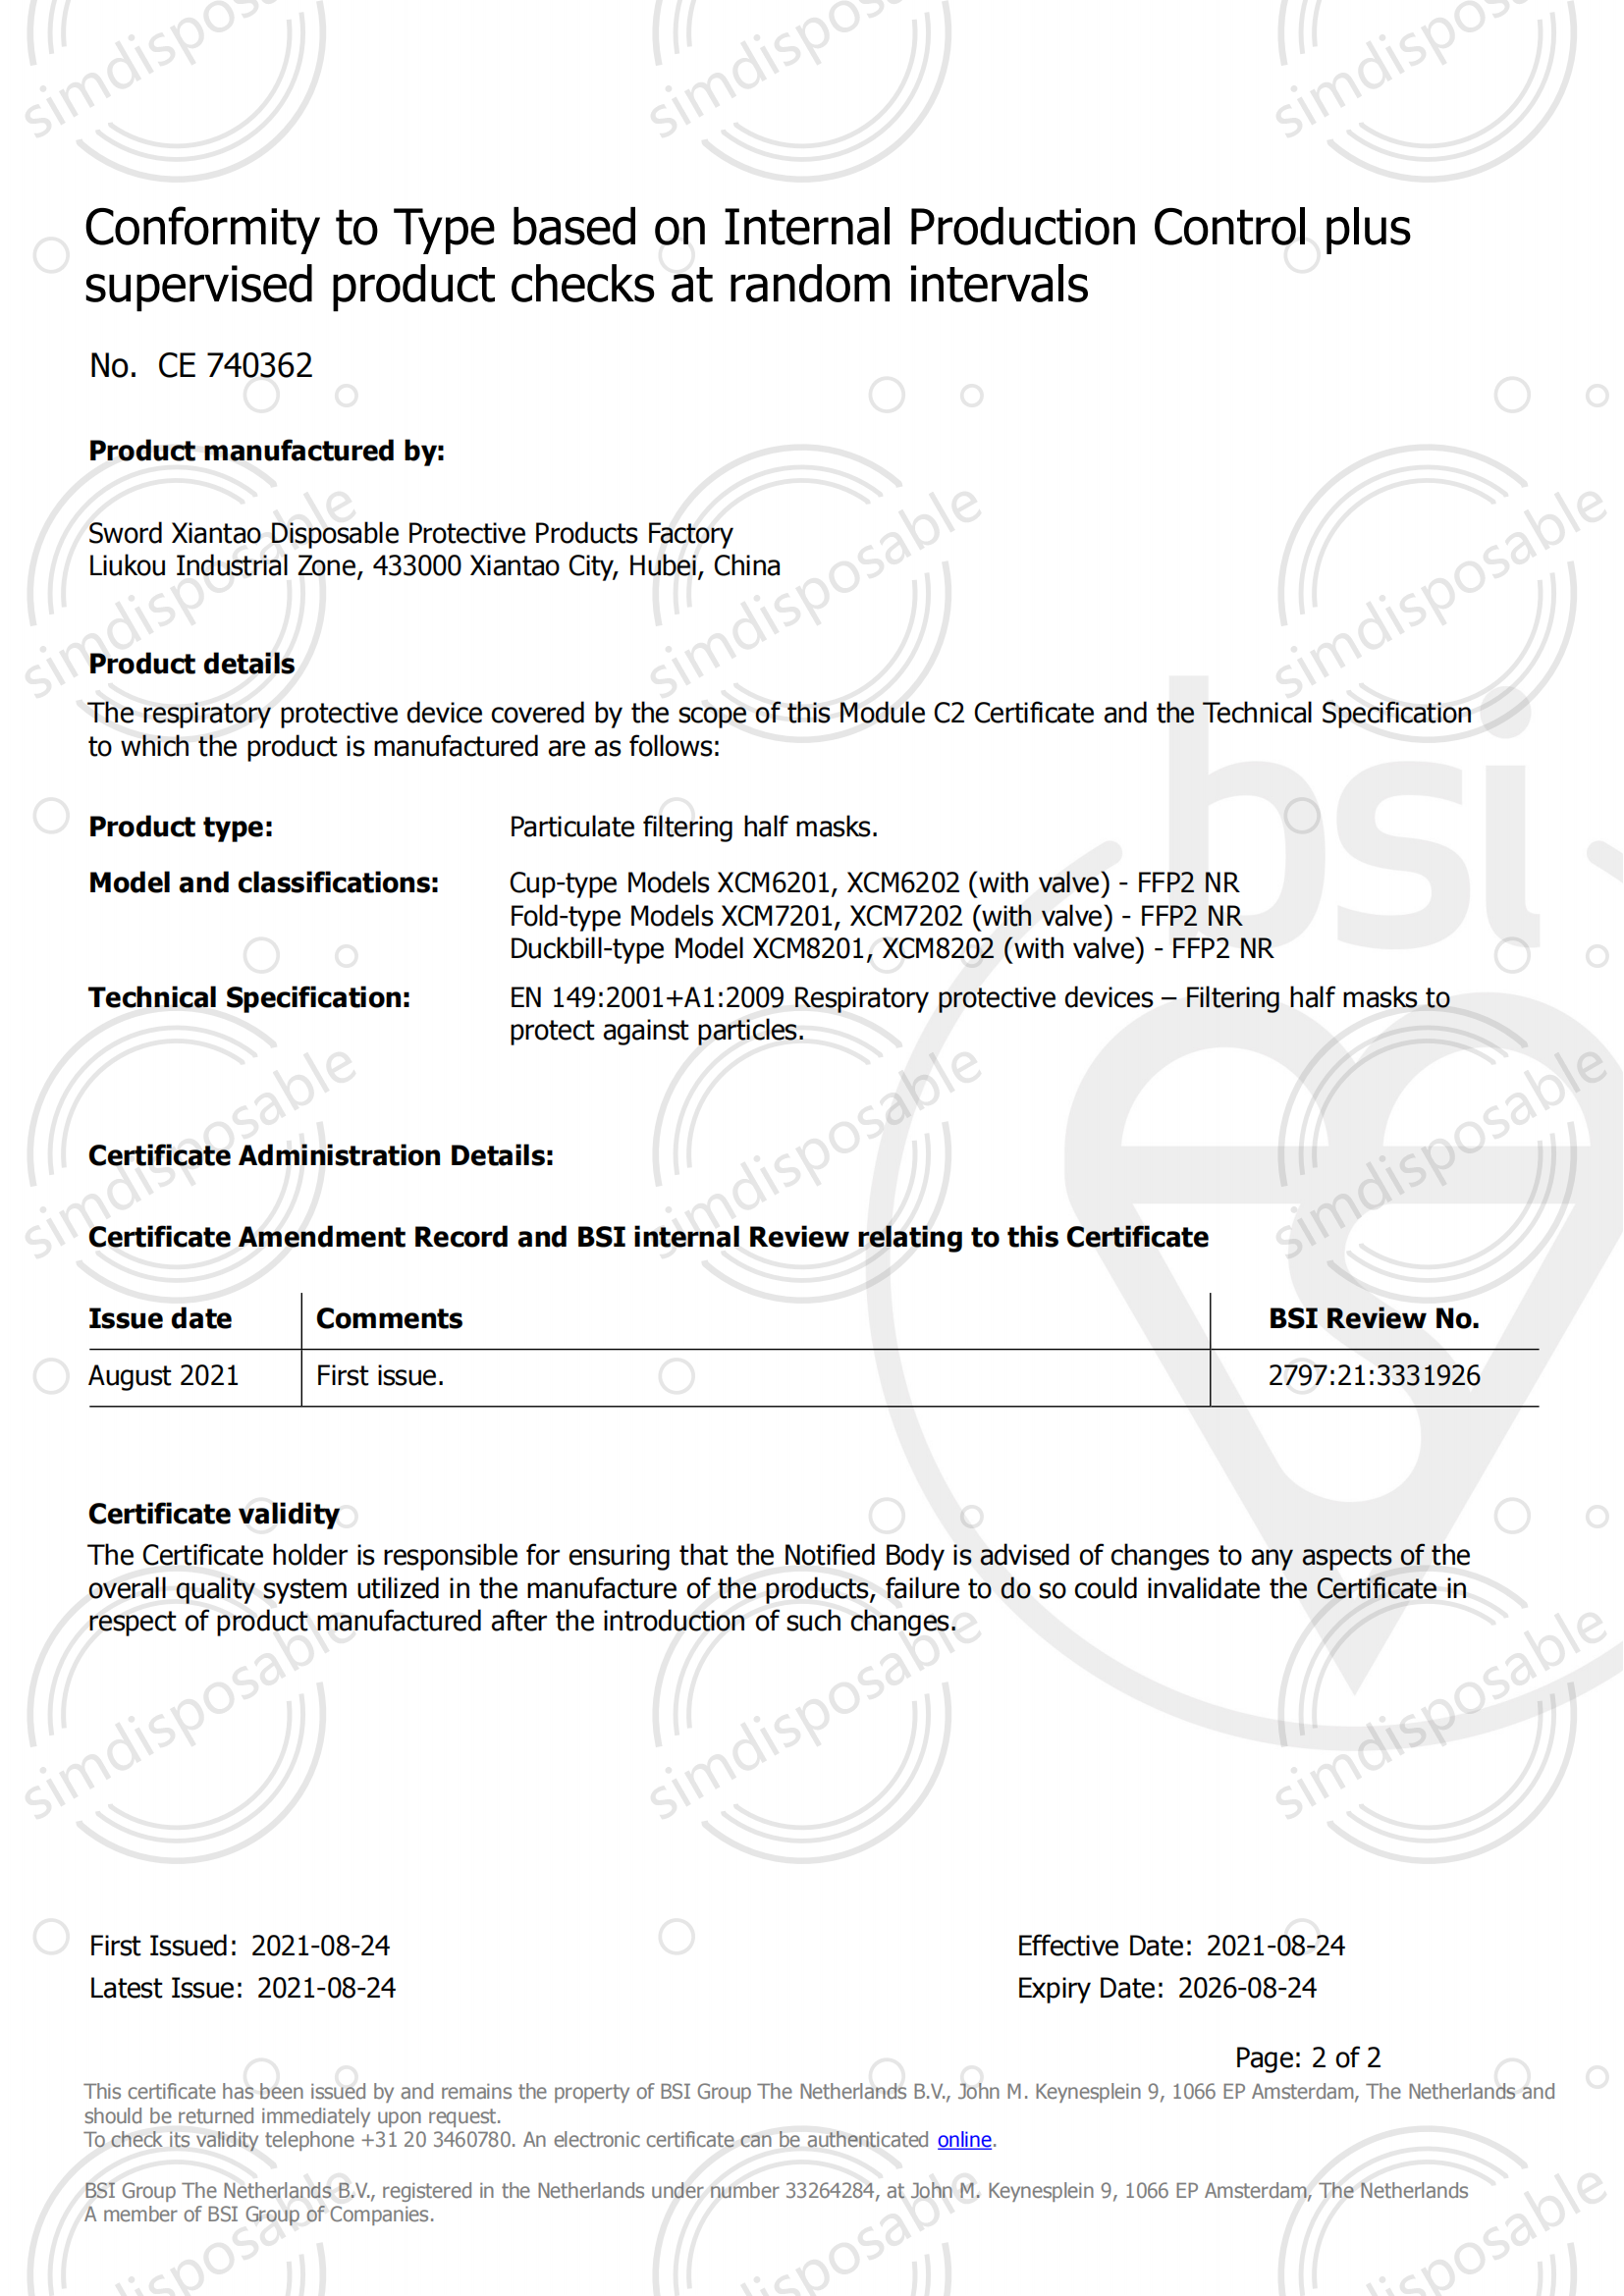 PPE Certificate (PPF2 Mask) -Module C2